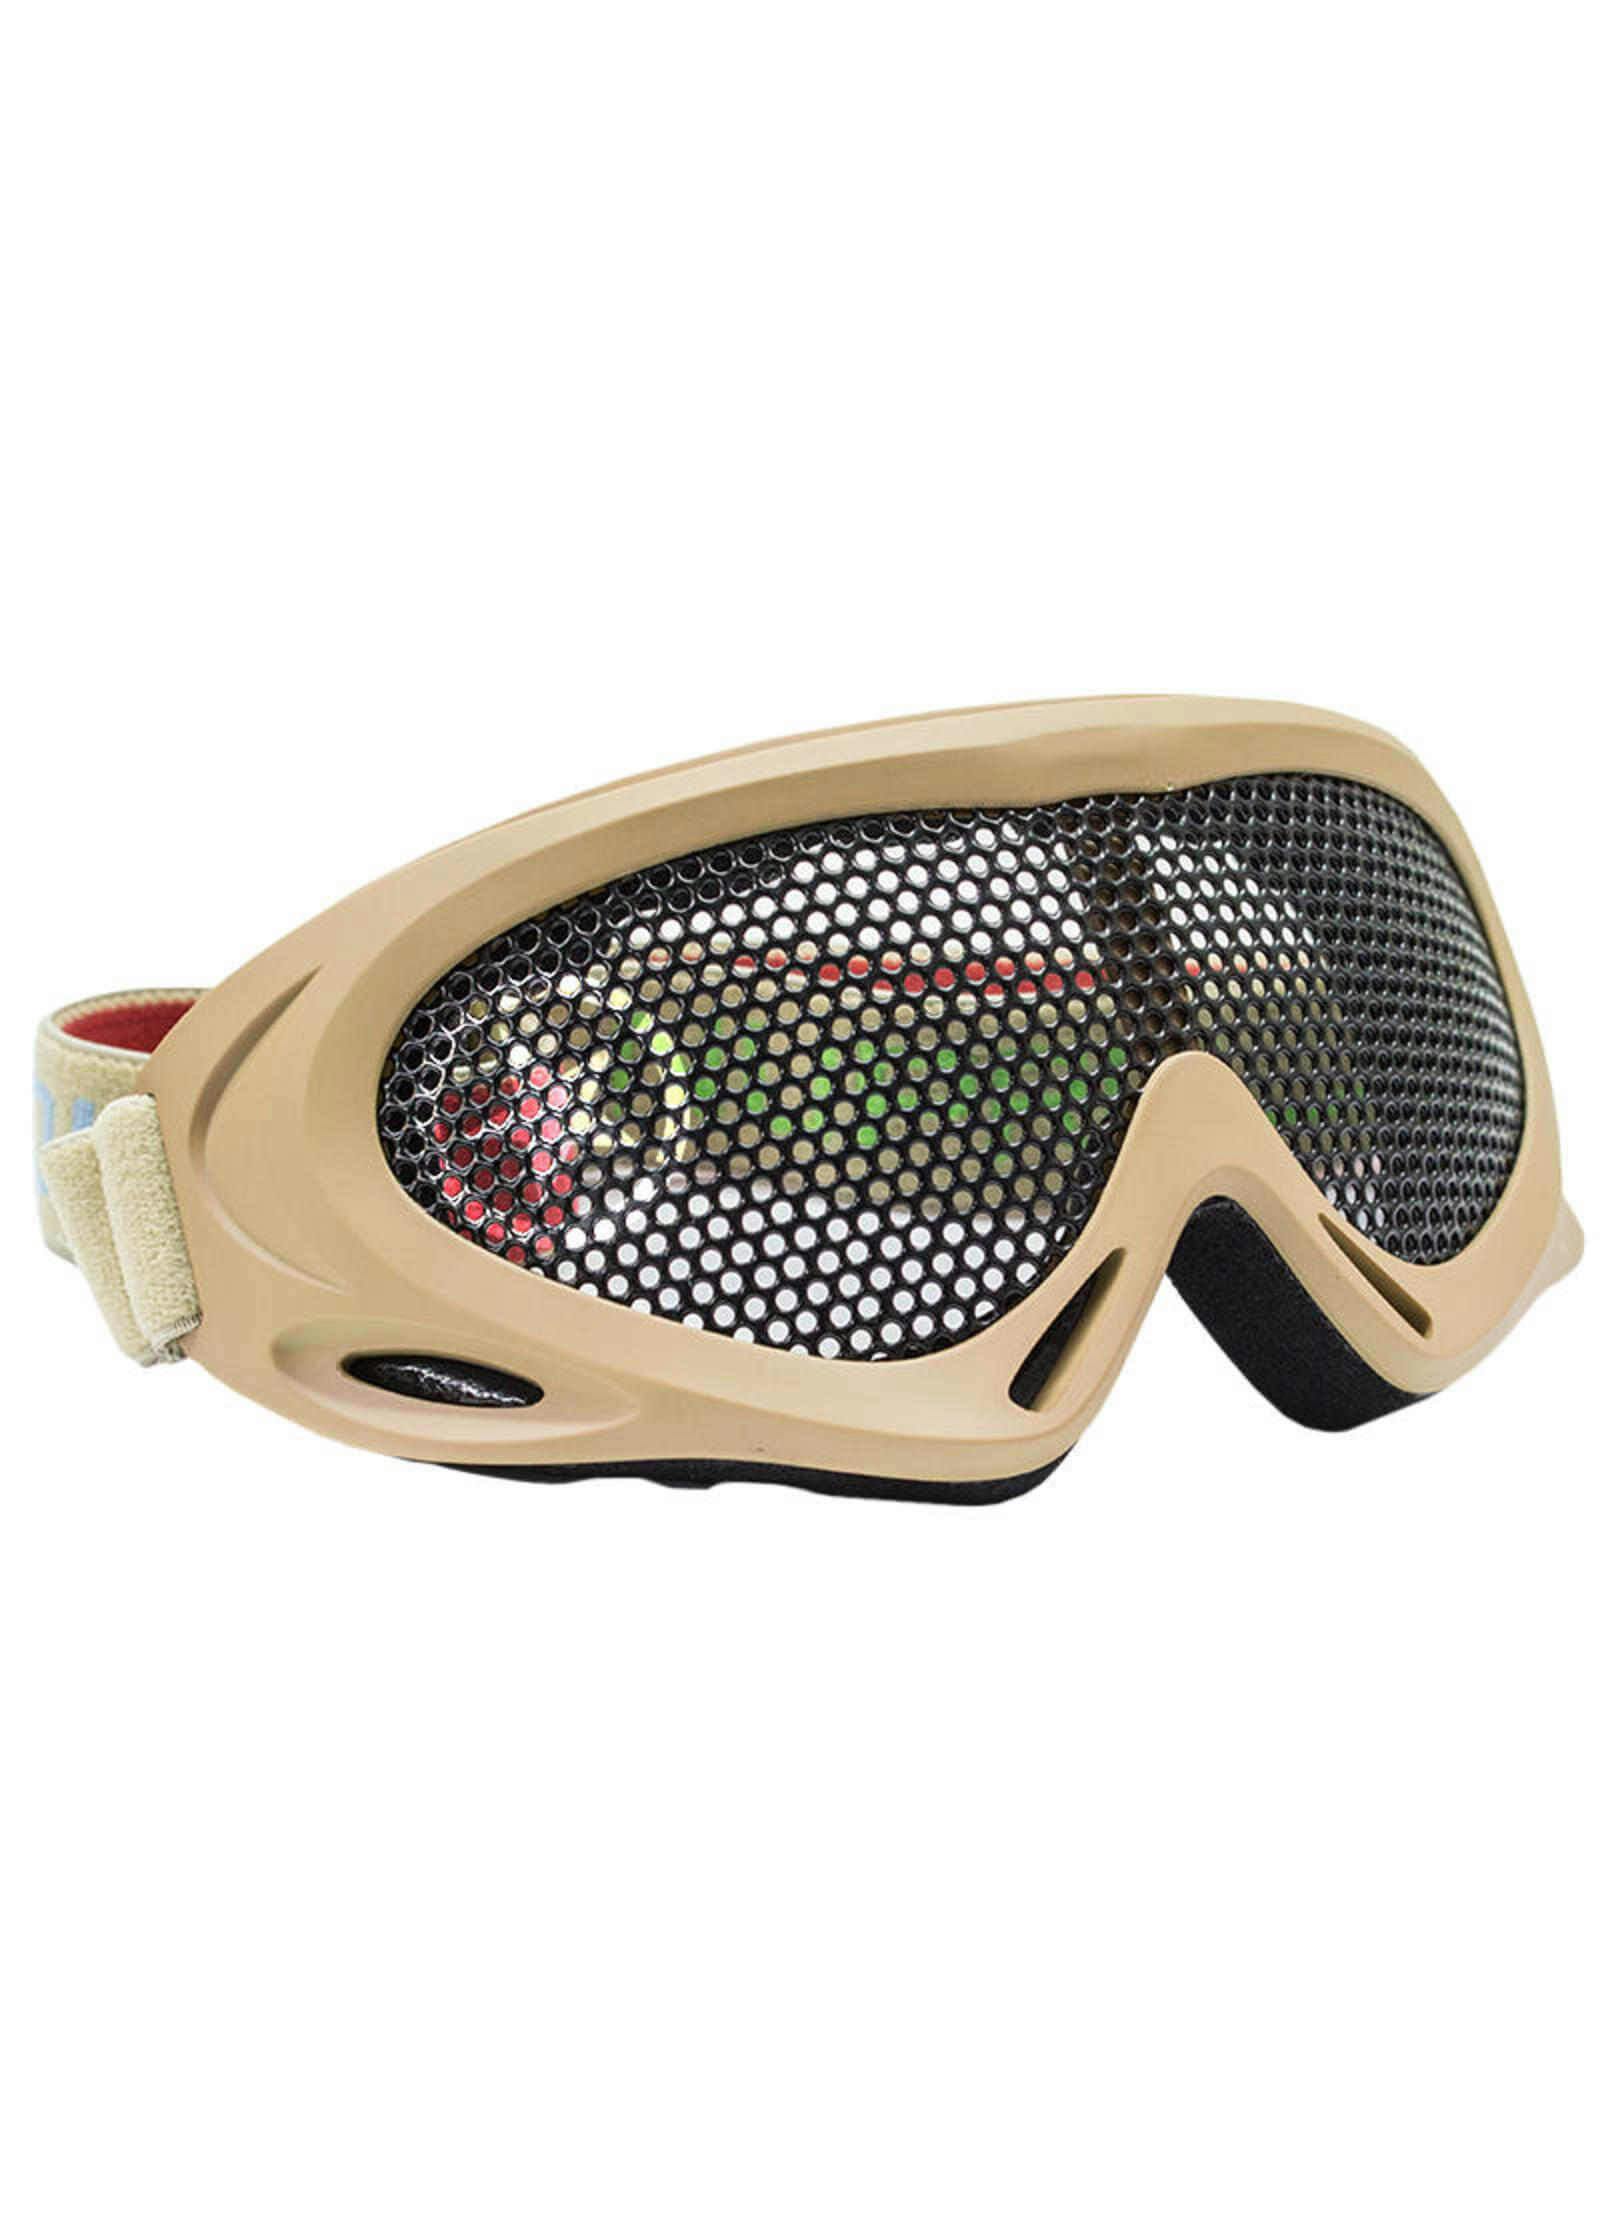 Tan Nuprol PRO Mesh Eyewear Goggles Protection Airsoft Black Camo Green Grey 